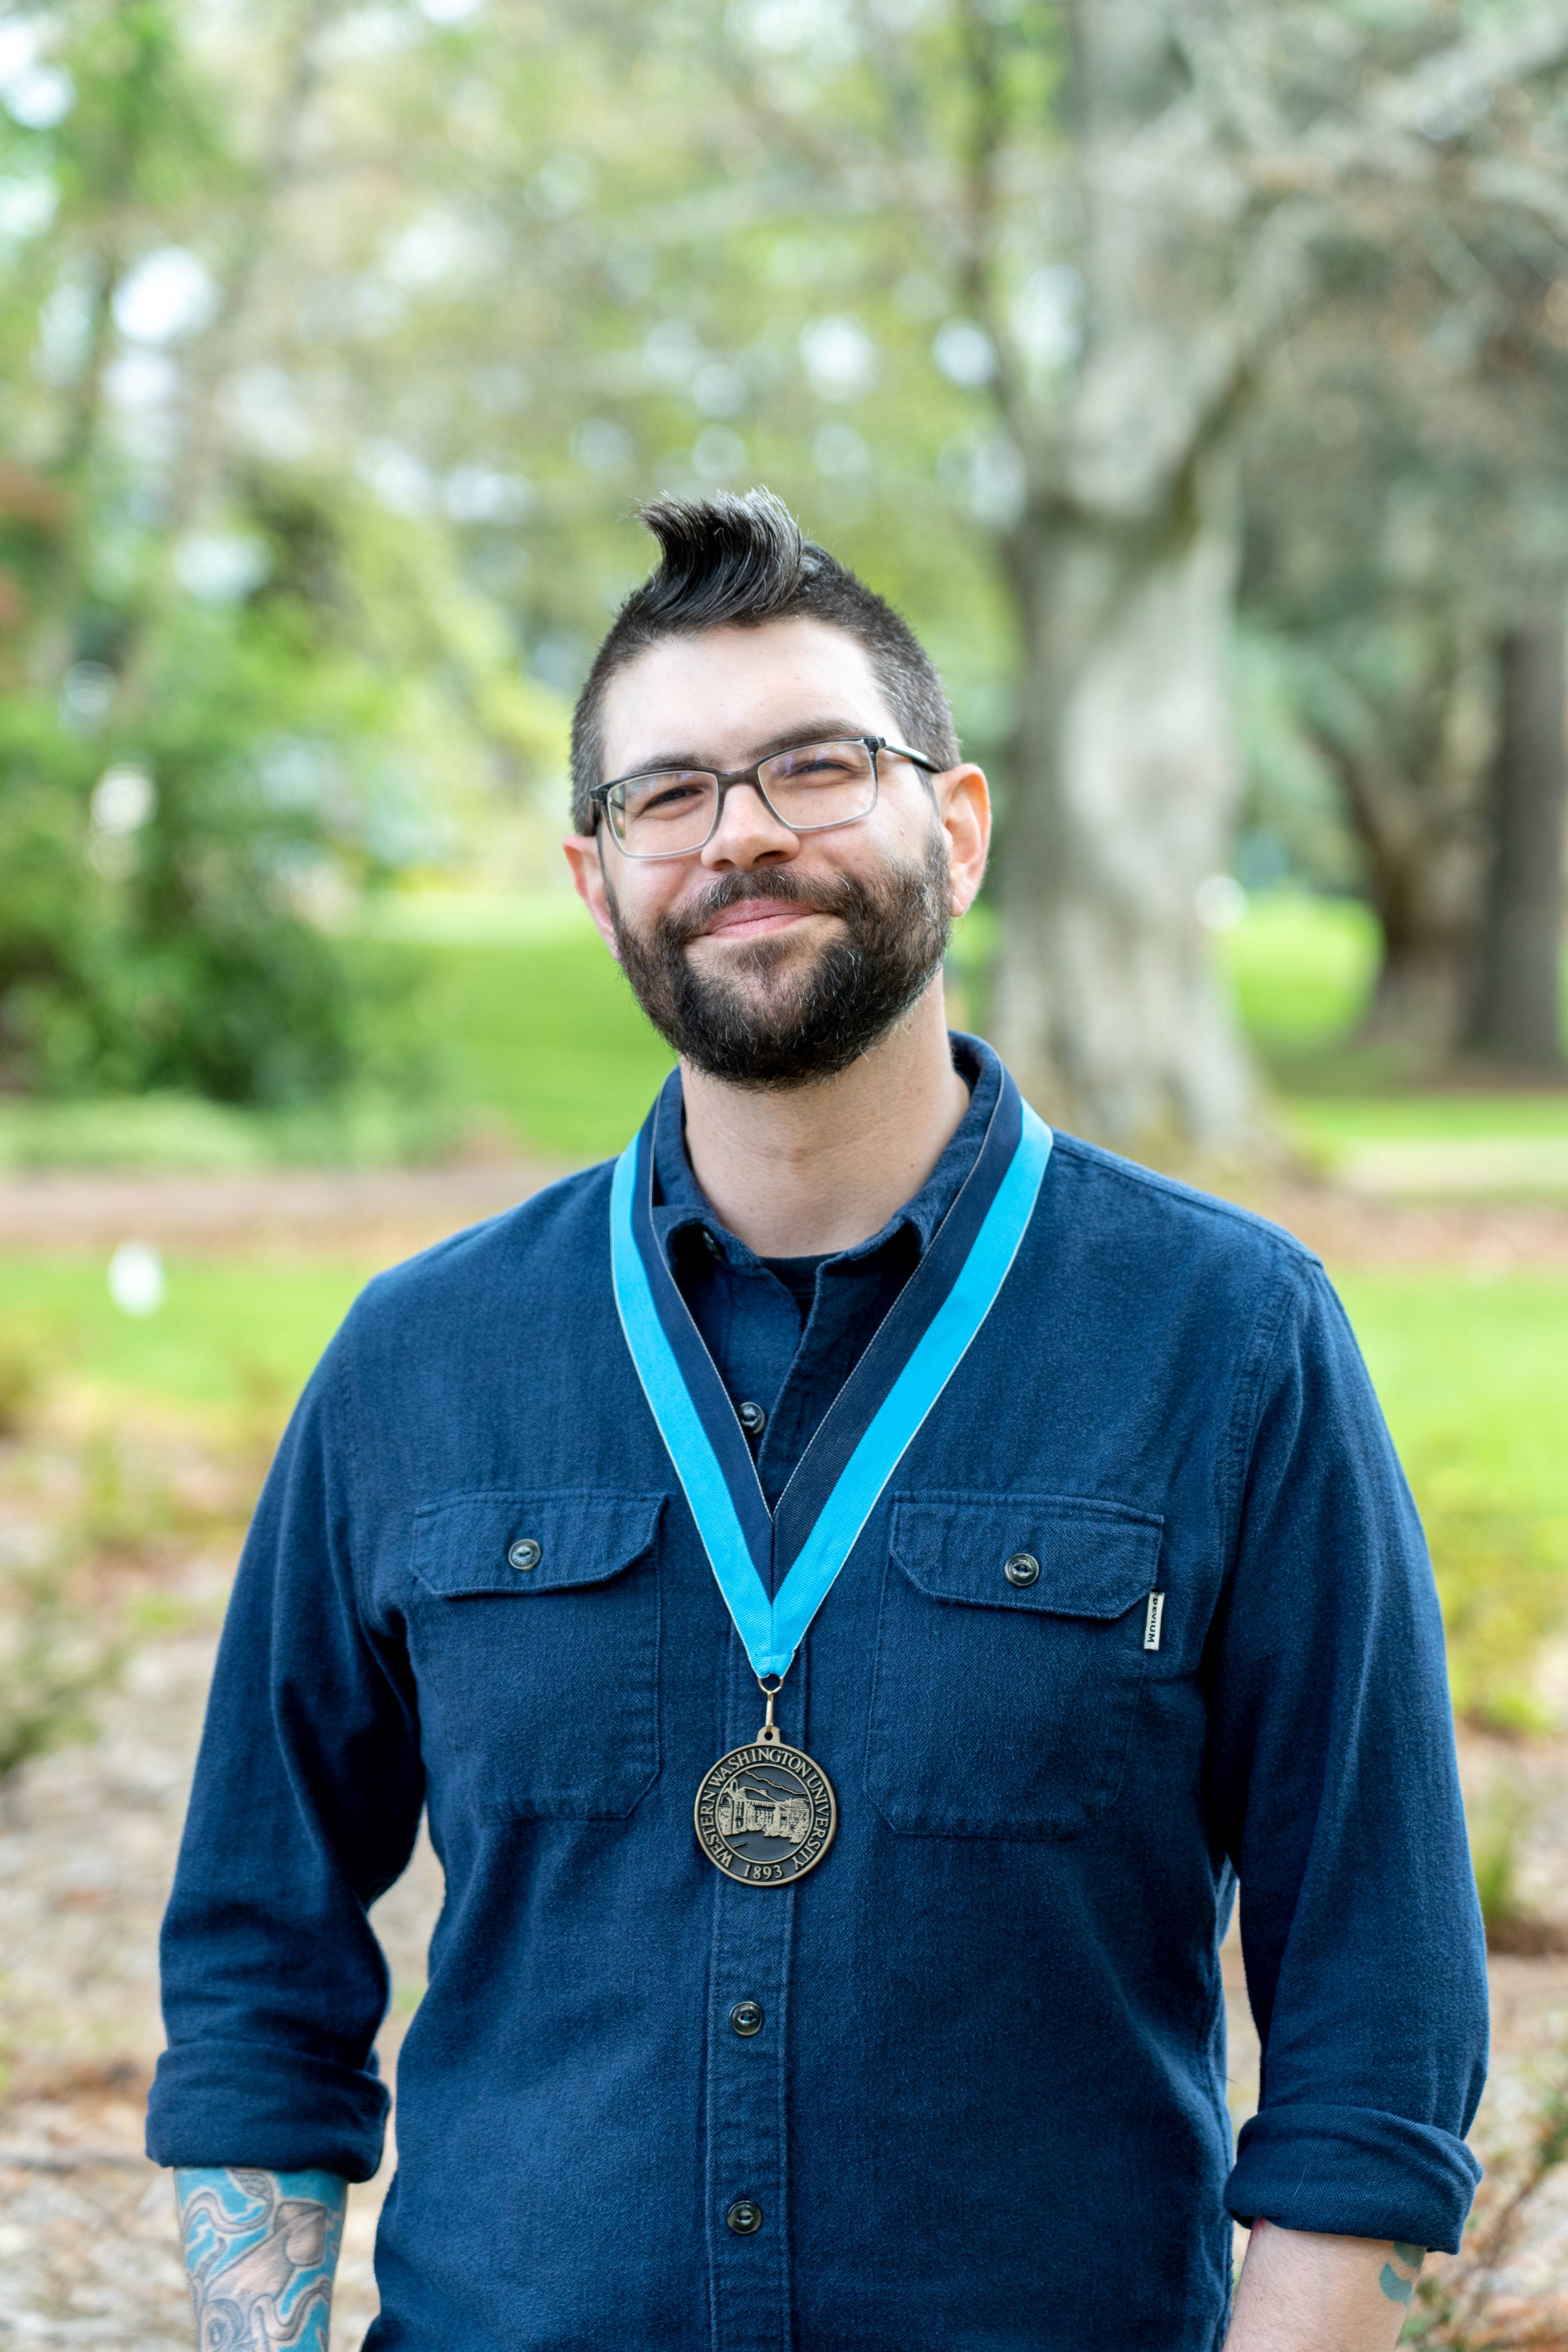 Josh Cerretti smiling warmly wearing a blue shirt and WWU medallion on a neck ribbon